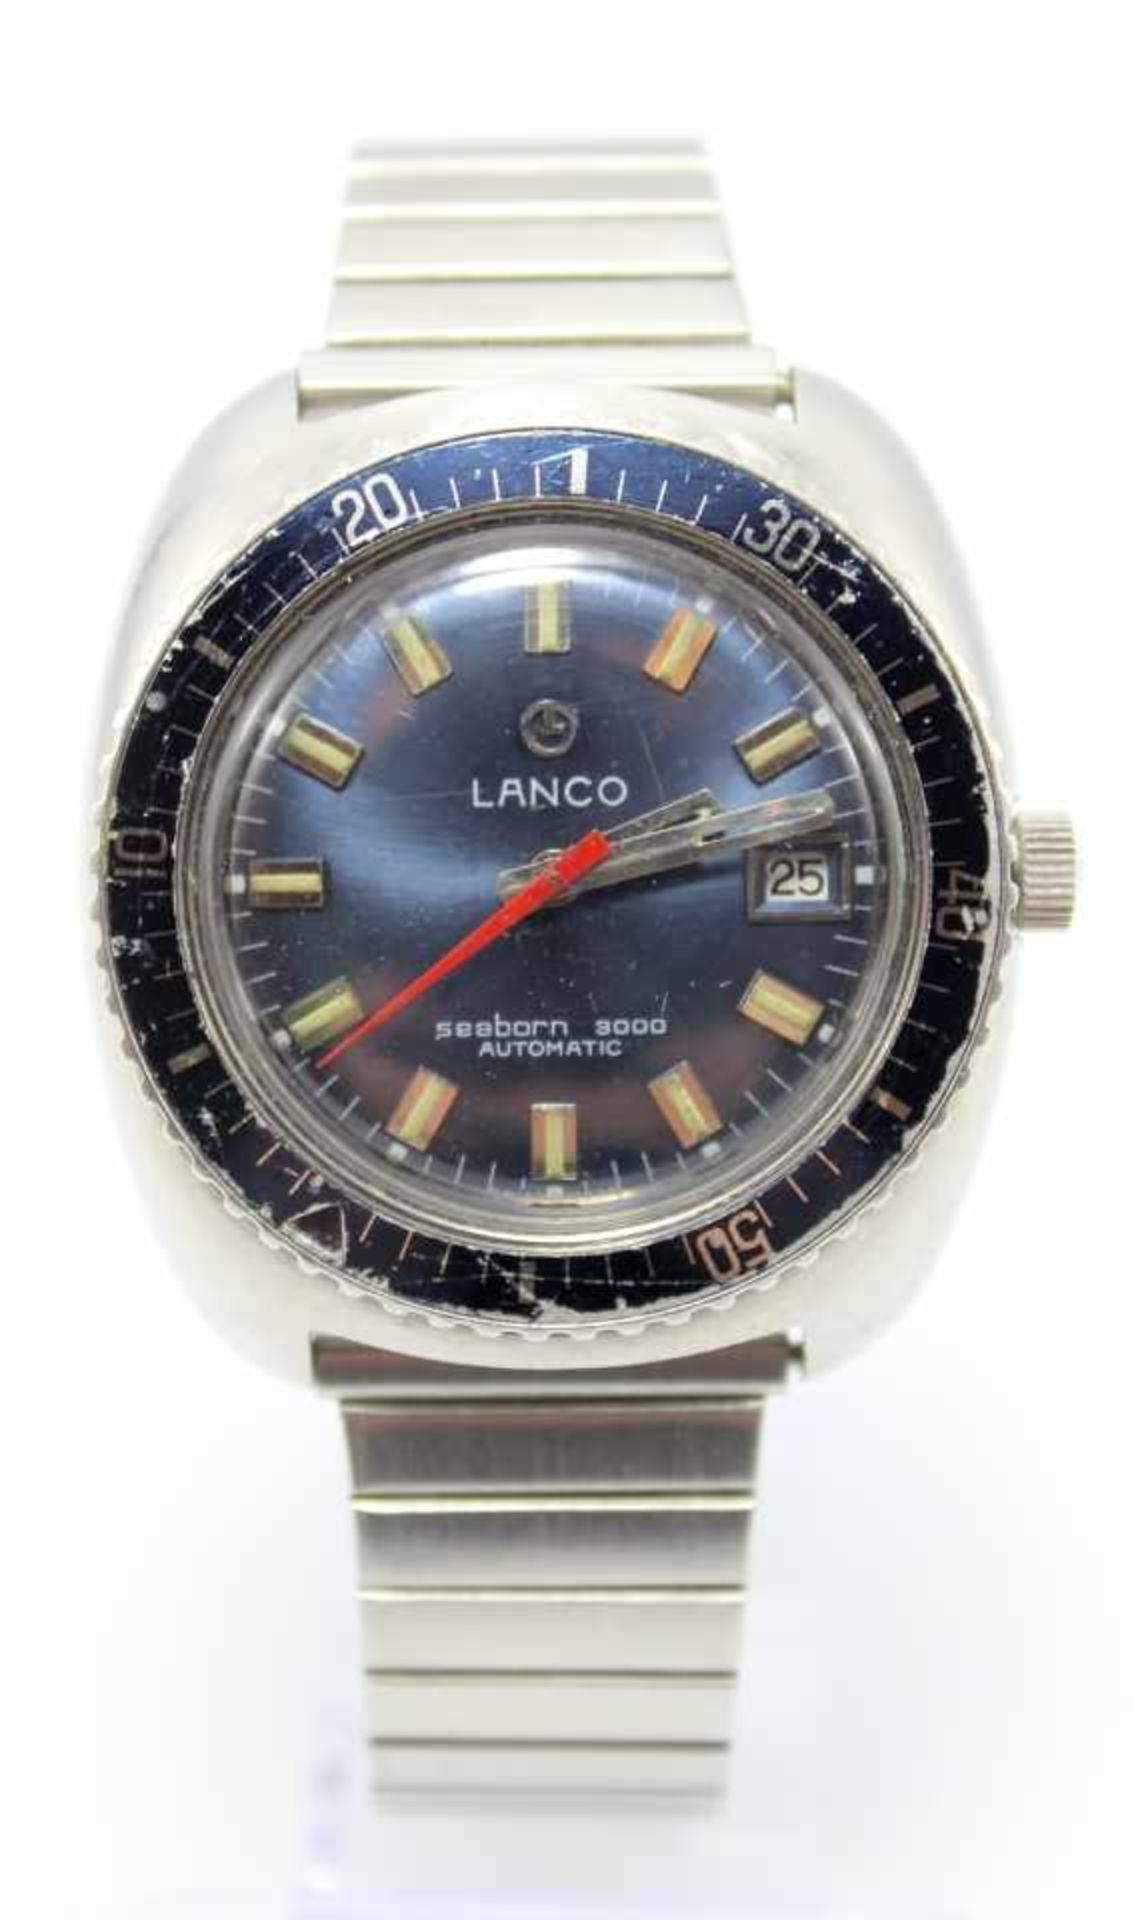 Armbanduhr - Marke Lanco Seaborn 3000, Automatic, Nr.53019-10, Swiss Made, Datumsanzeige, große